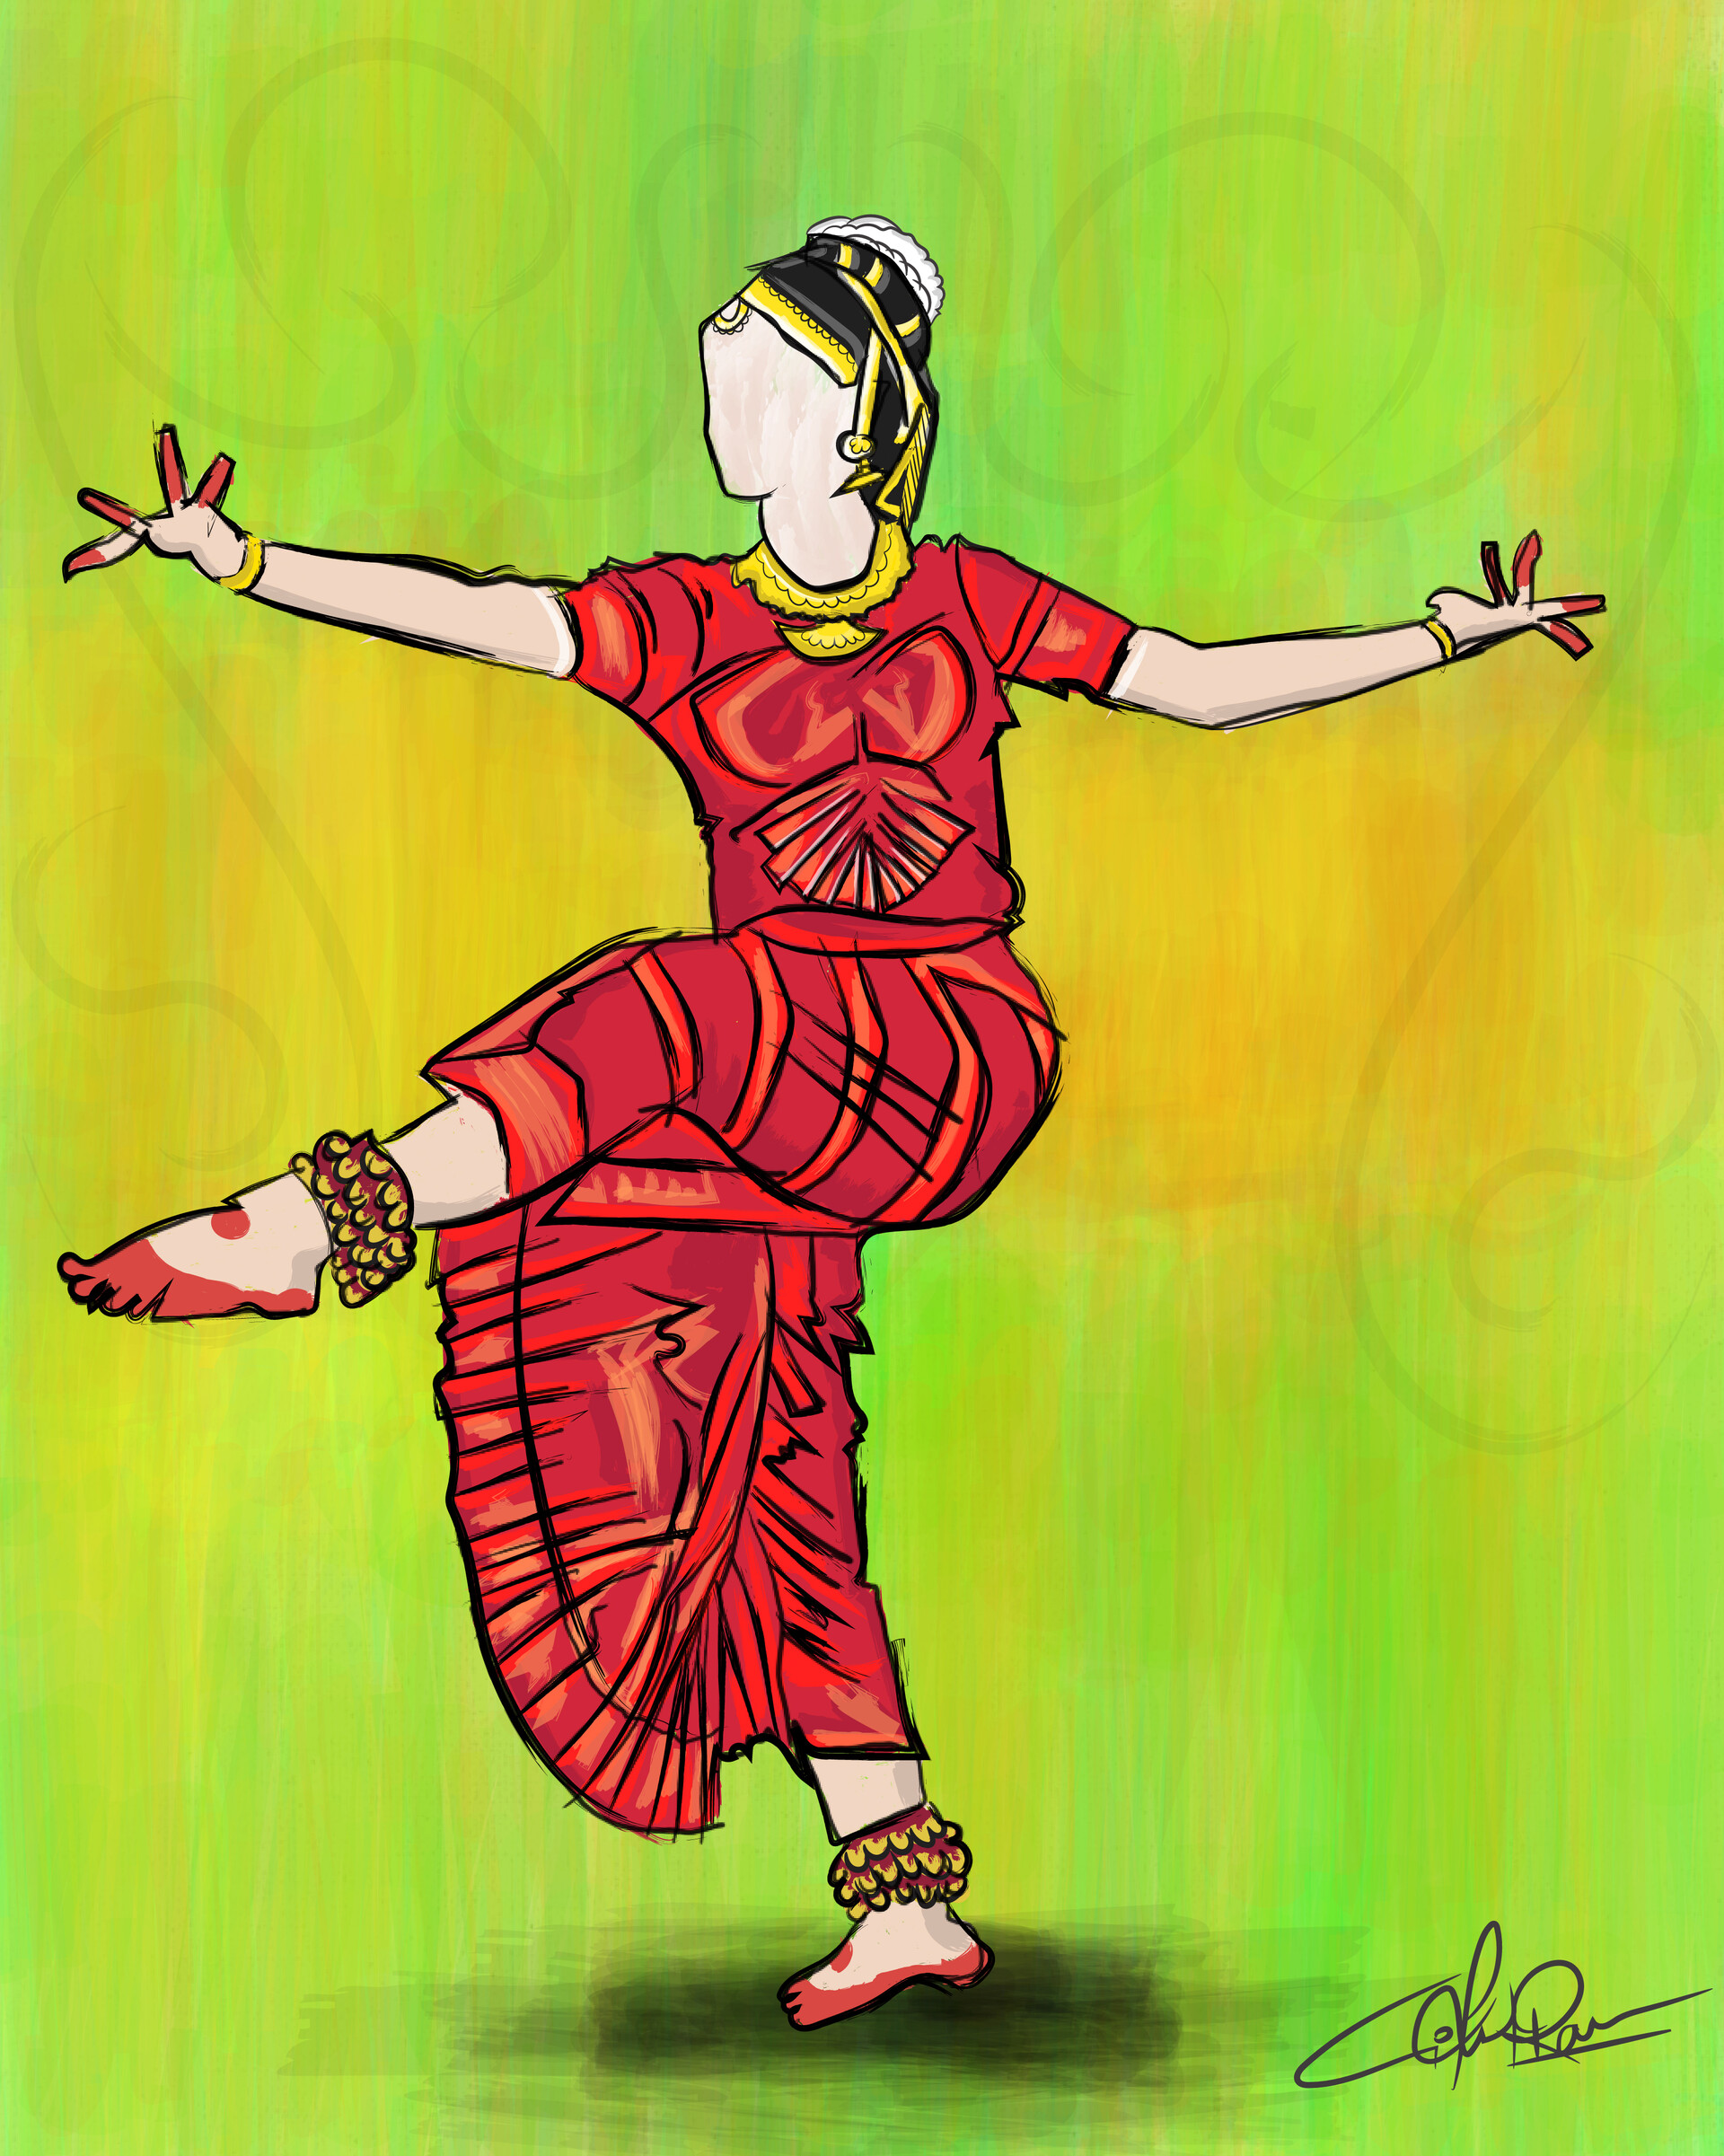 ArtStation - Bharatanatyam Classical Dances of India